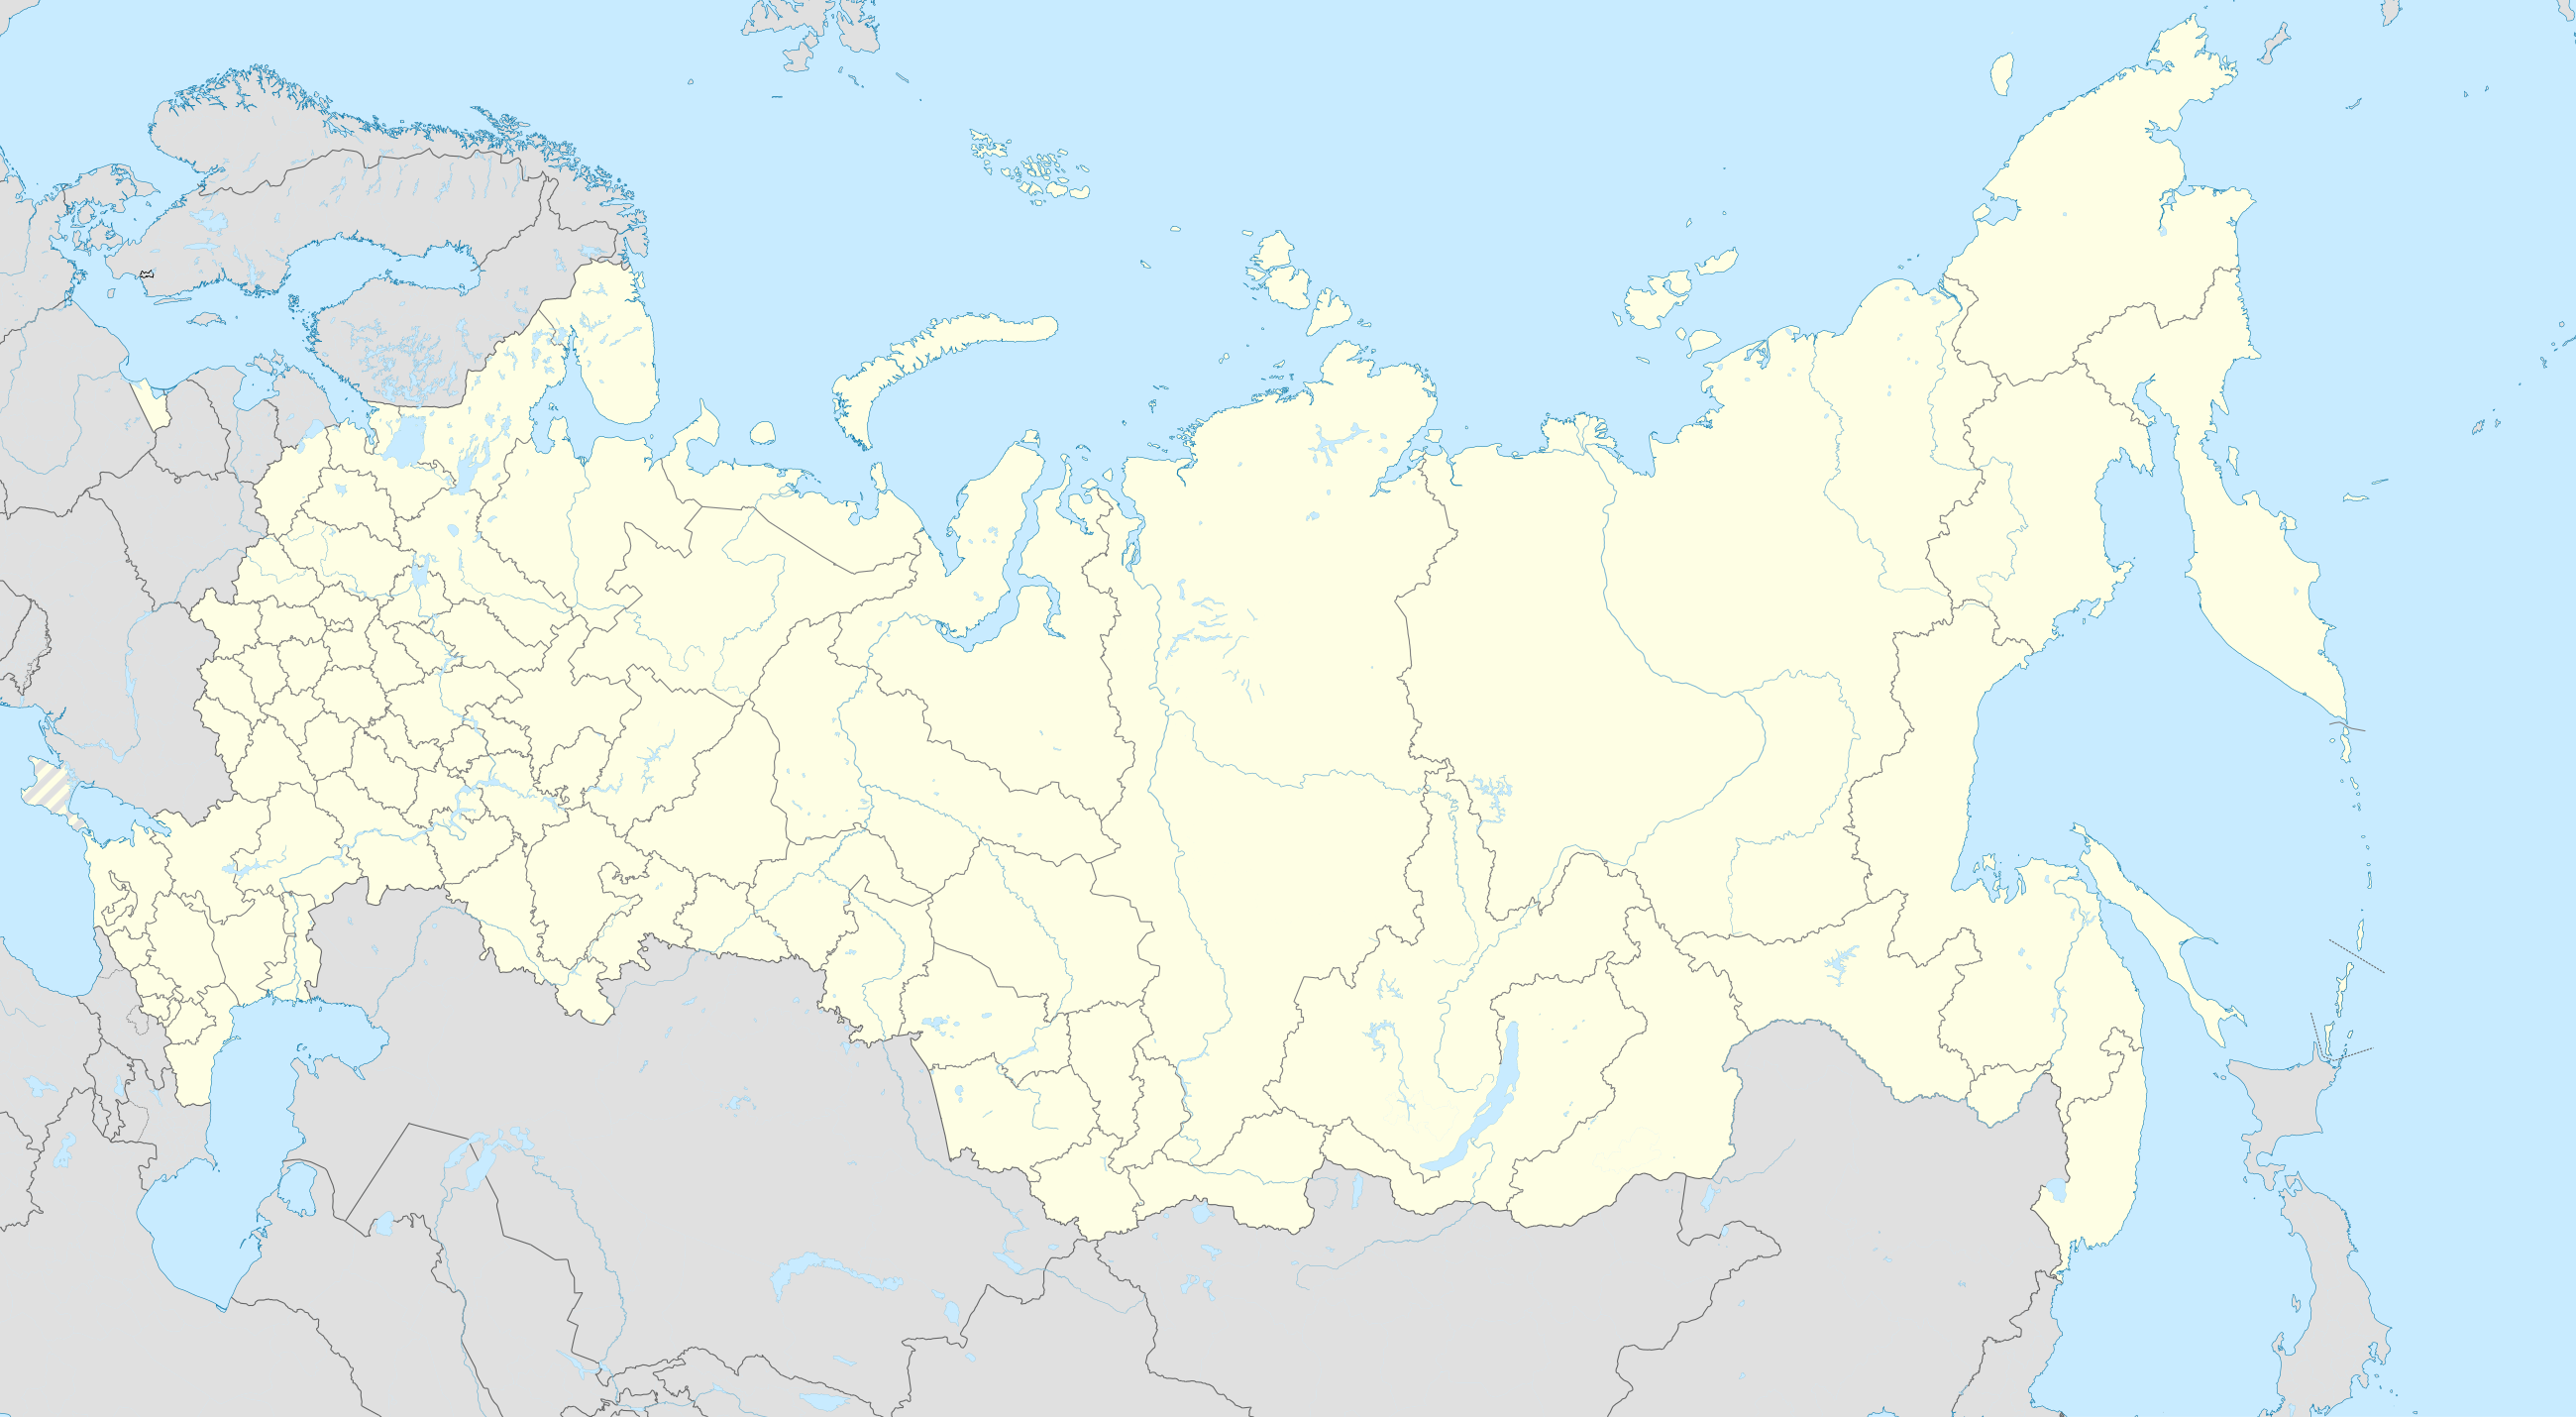 CircularToucan/sandbox is located in Russia